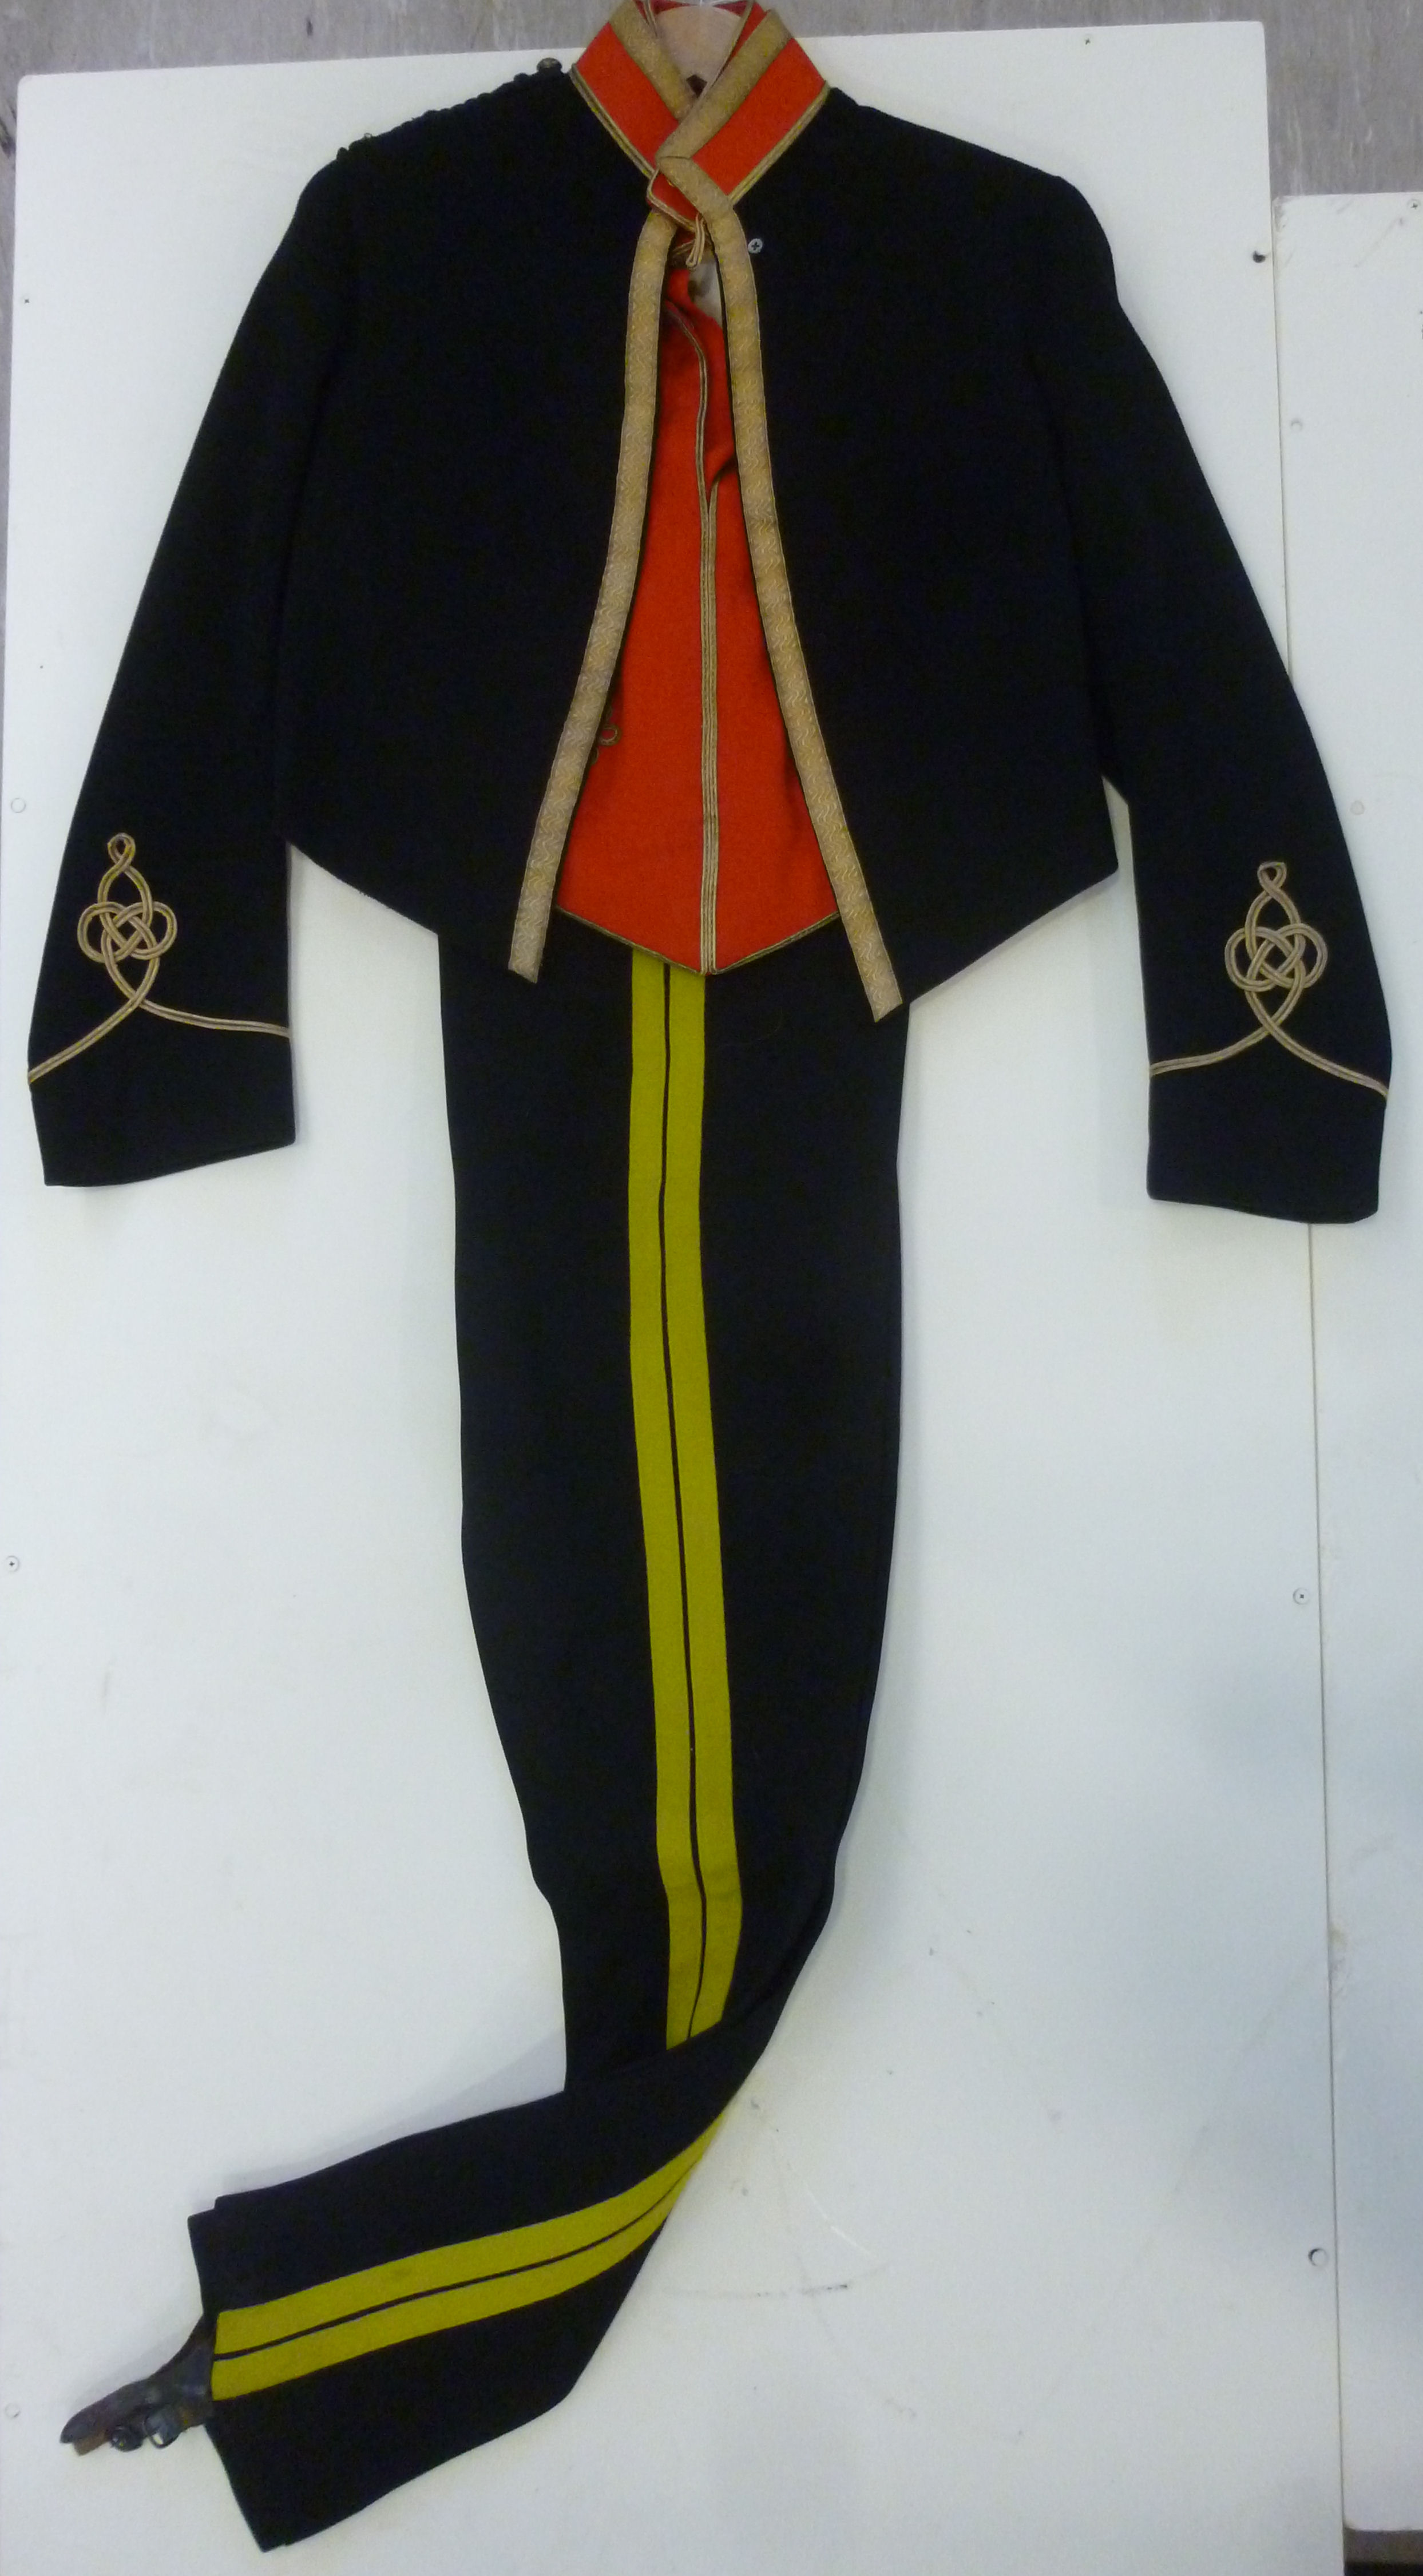 A Hussar's regimental dress uniform blac